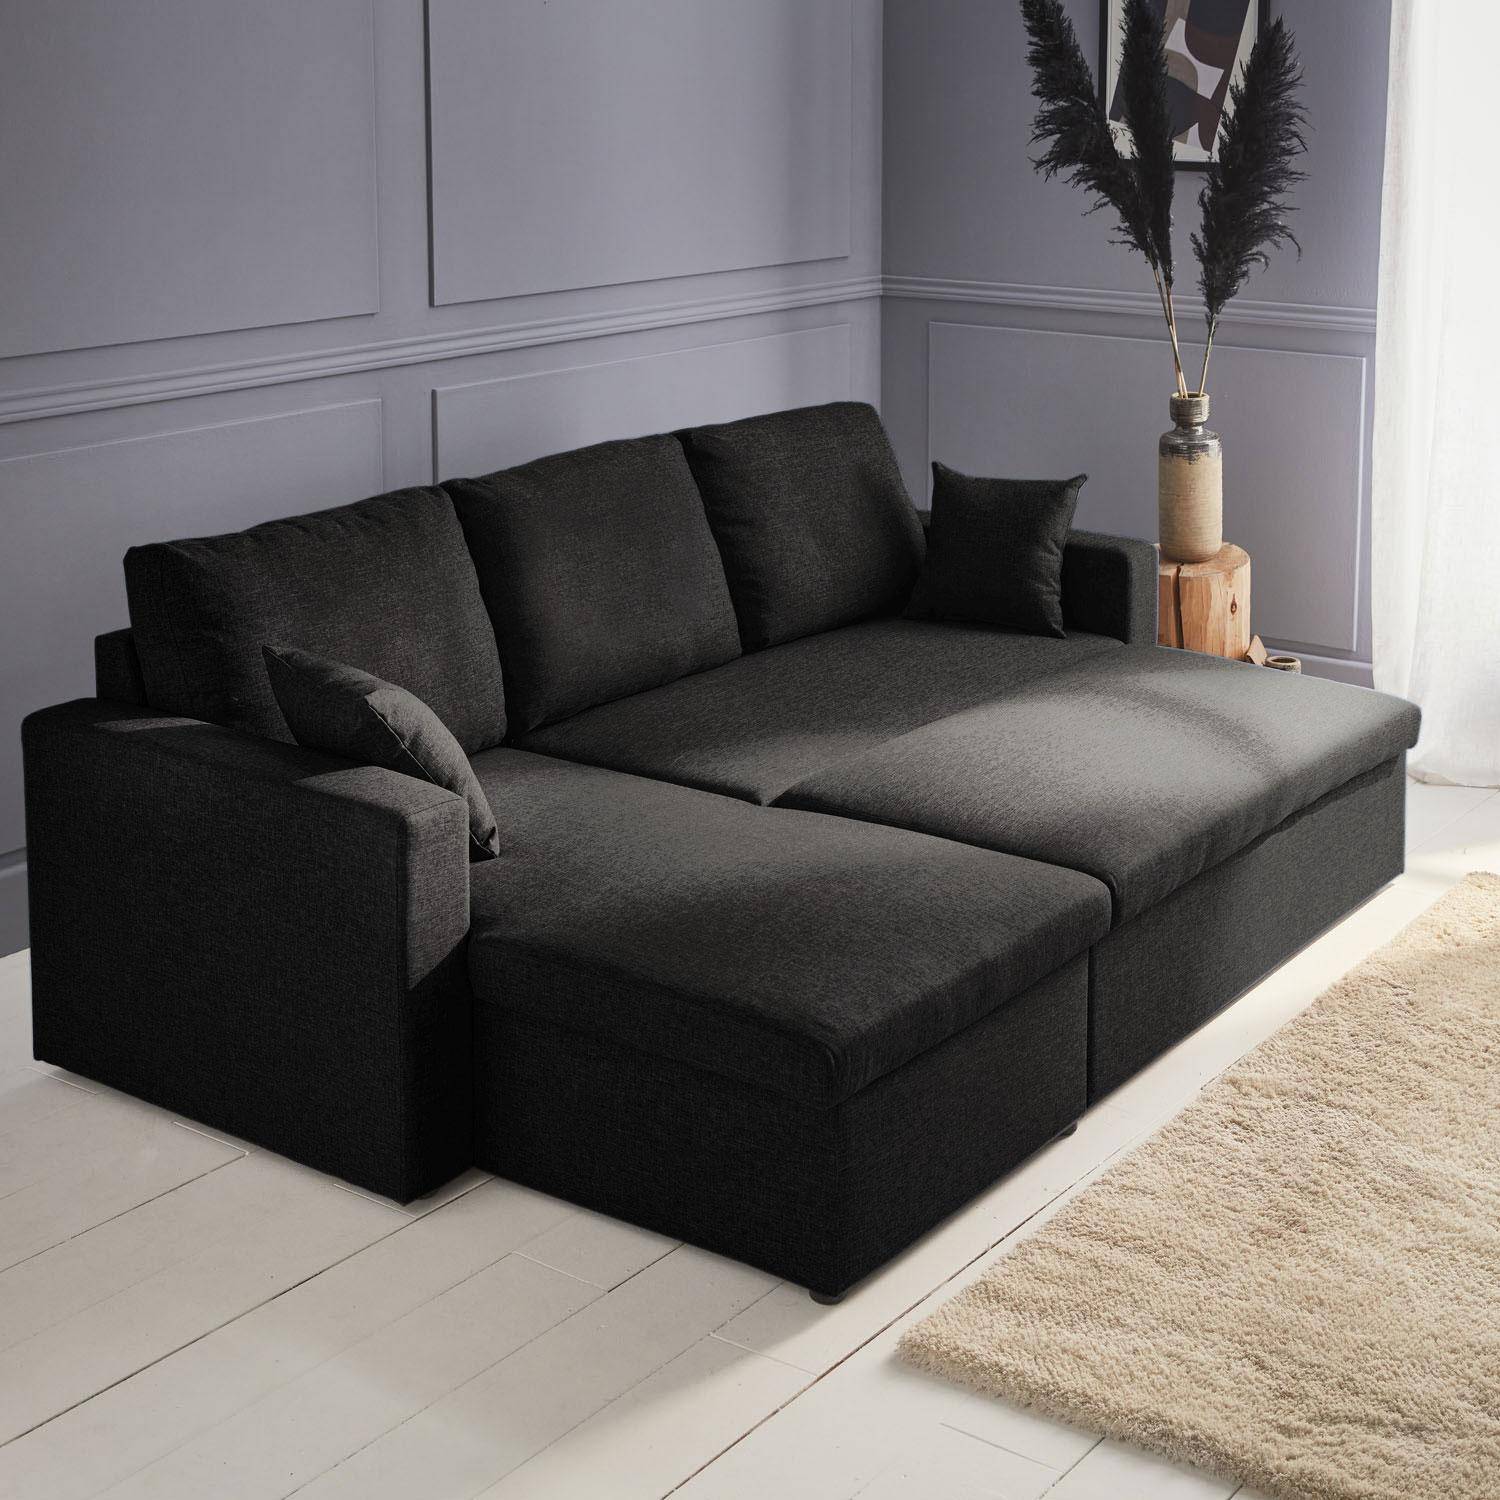 3-seater reversible black corner sofa bed with storage box, black L219xD81xH68cm, IDA,sweeek,Photo2